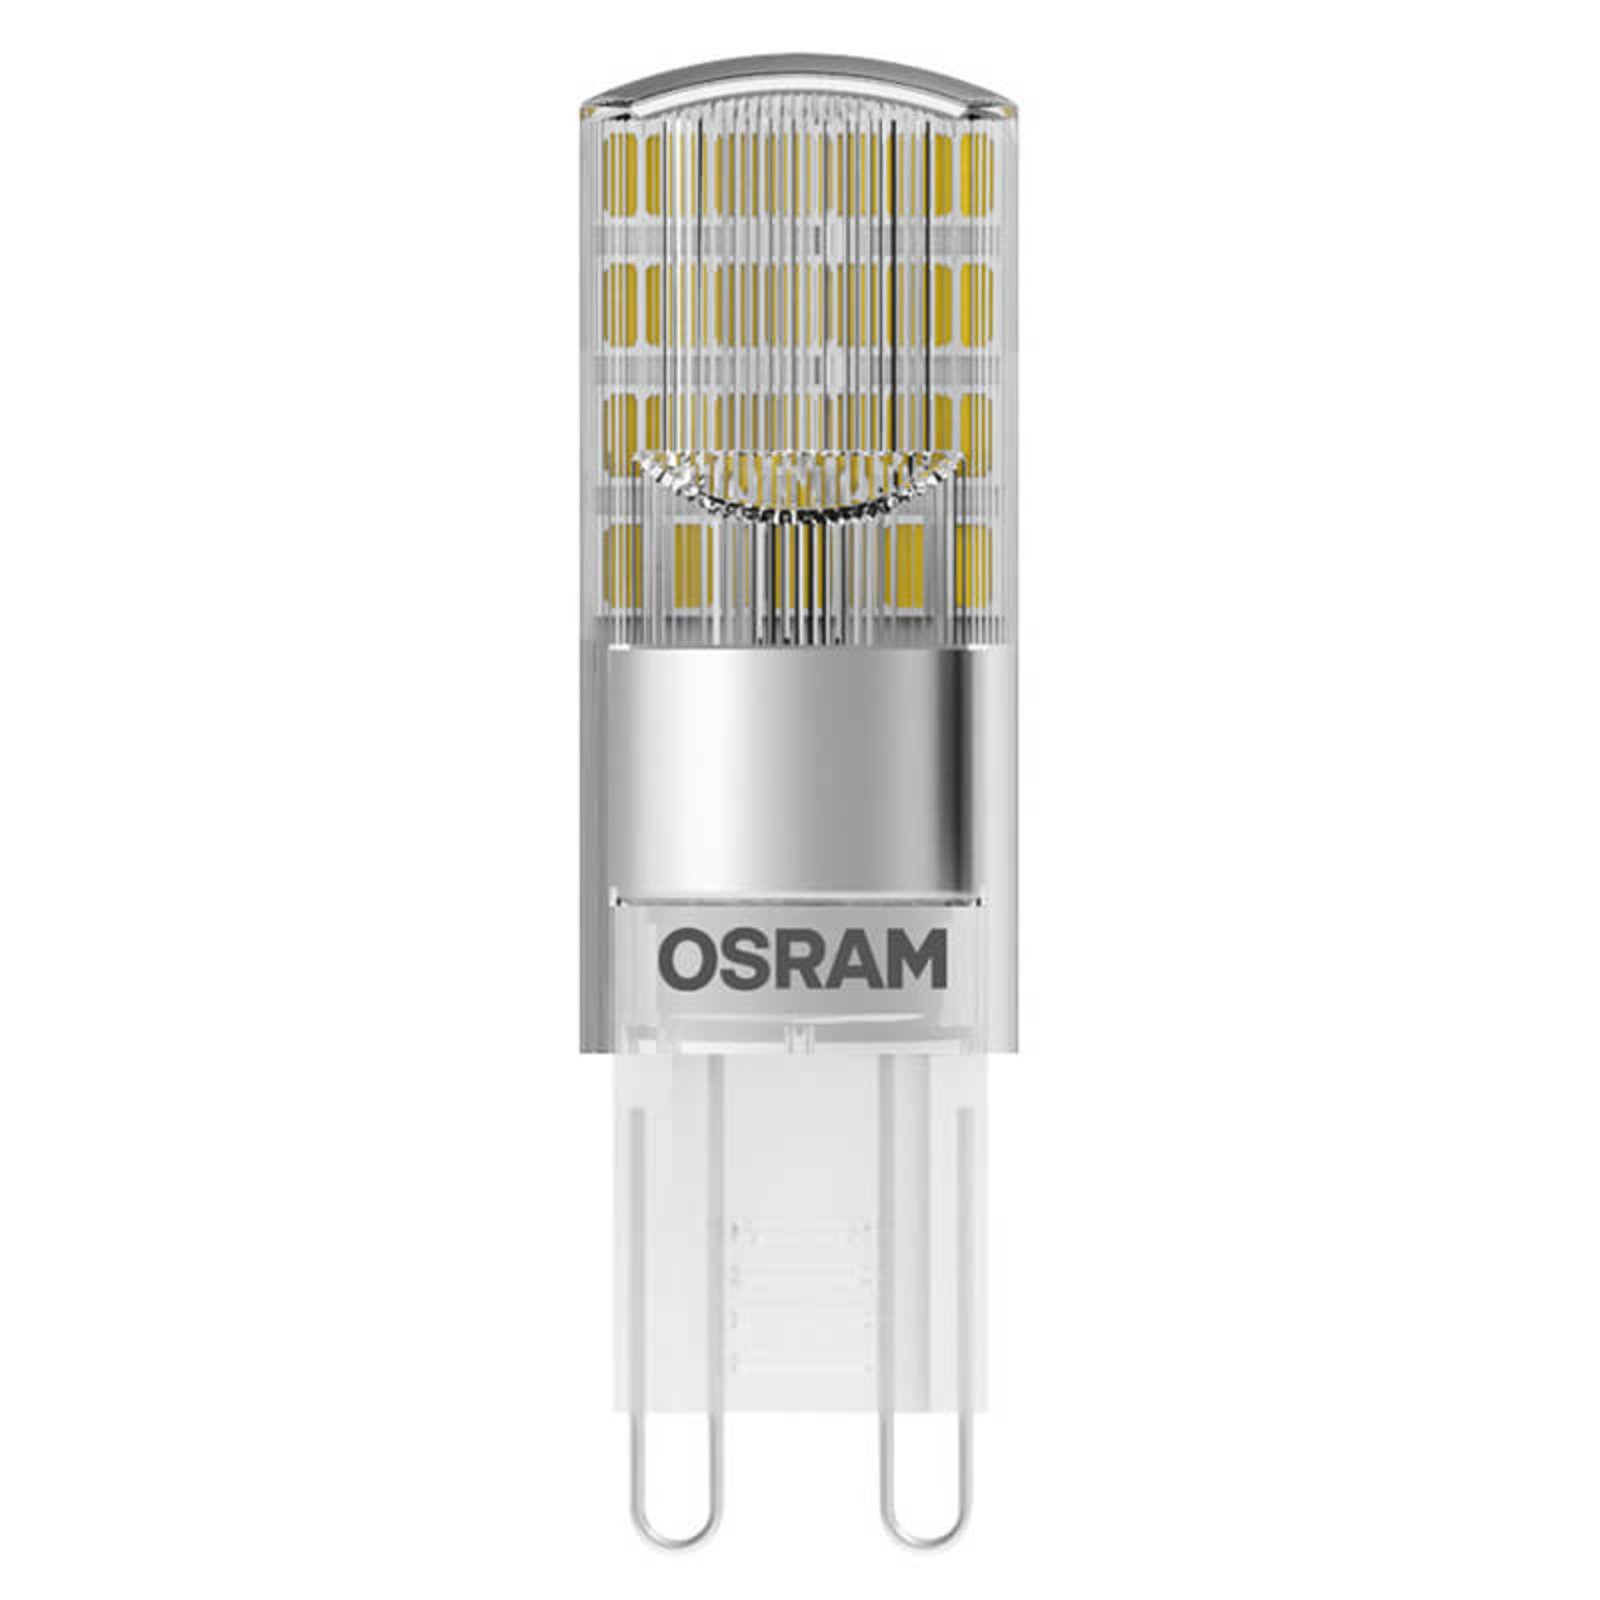 OSRAM LED bispina G9 2,6W, bianco caldo, 320 lm